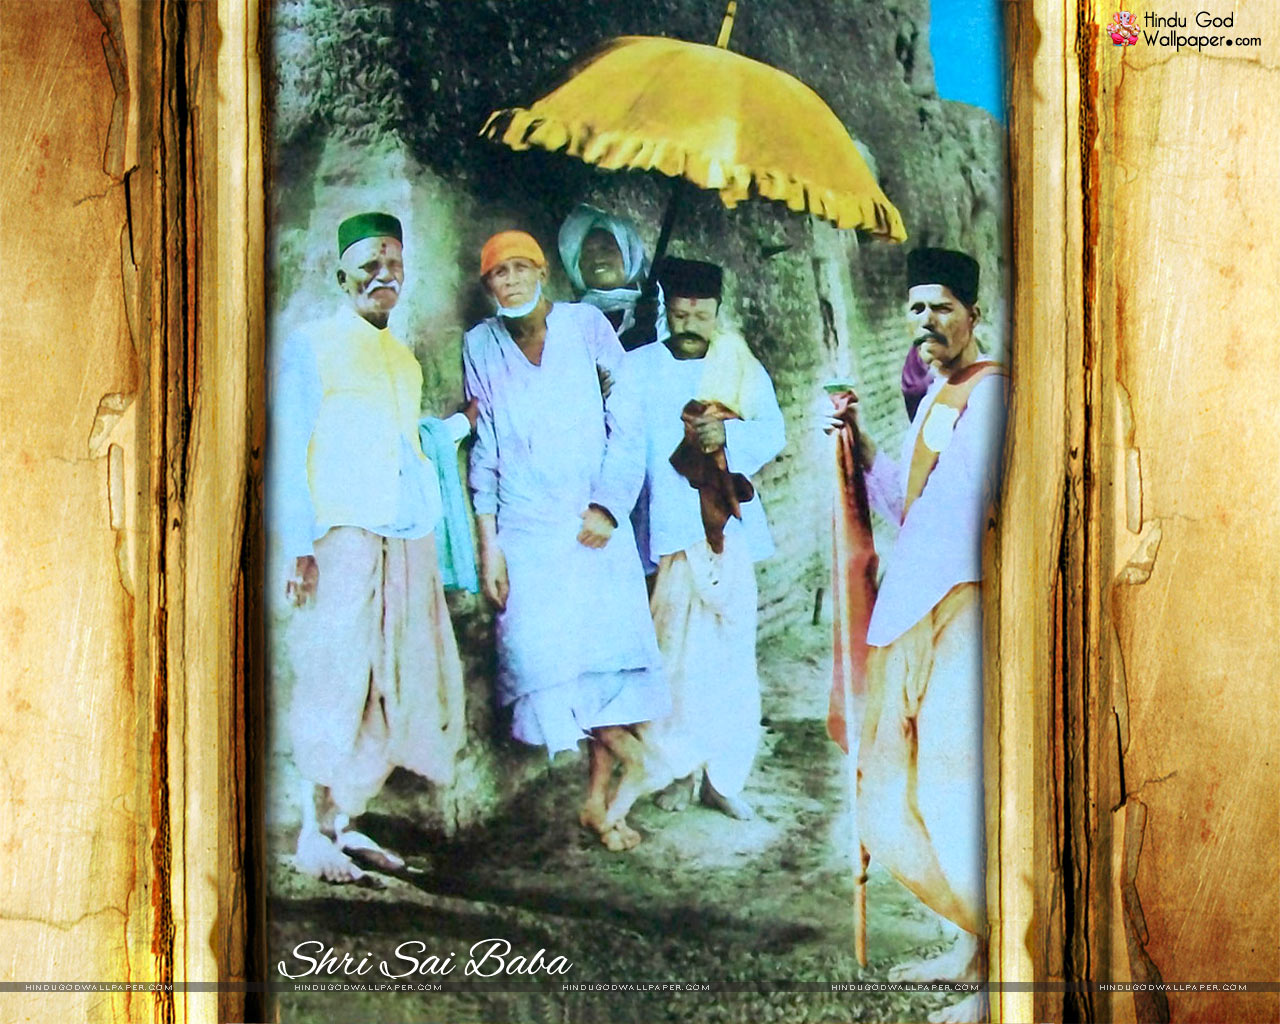 Original Sai Baba Wallpaper & Photo Download